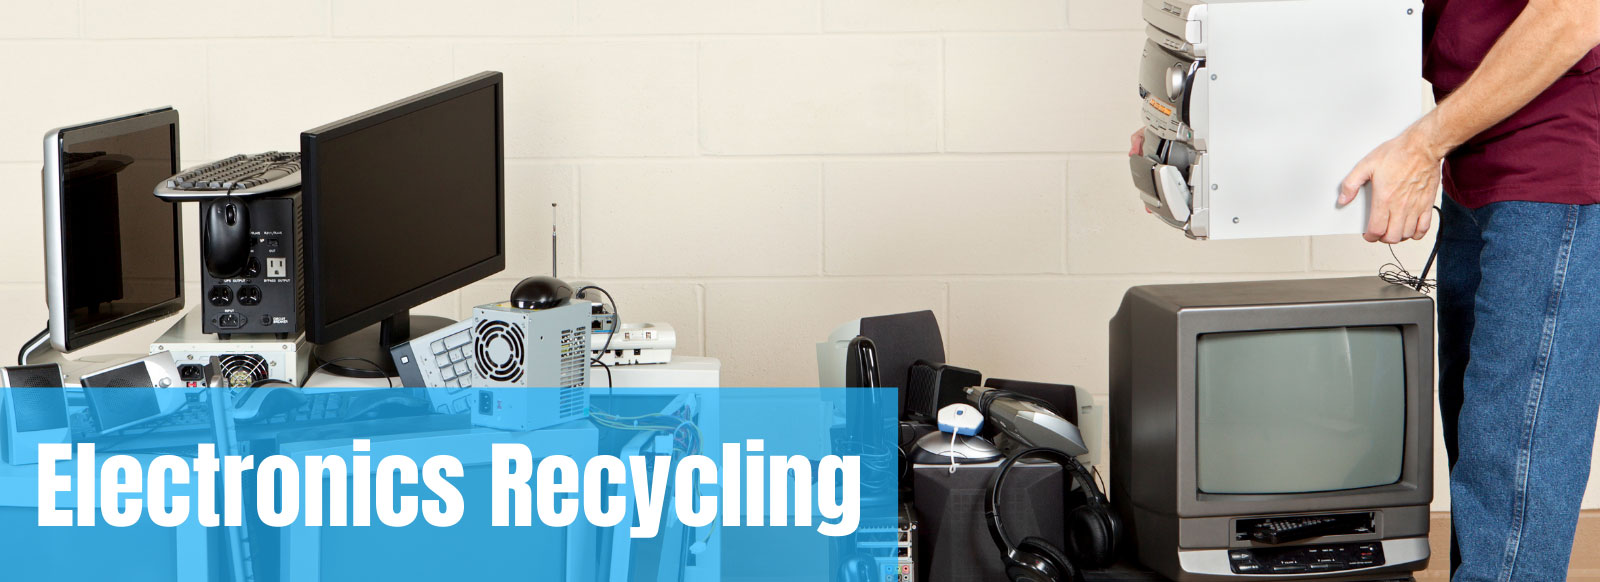 Electronics Recycling in Wichita